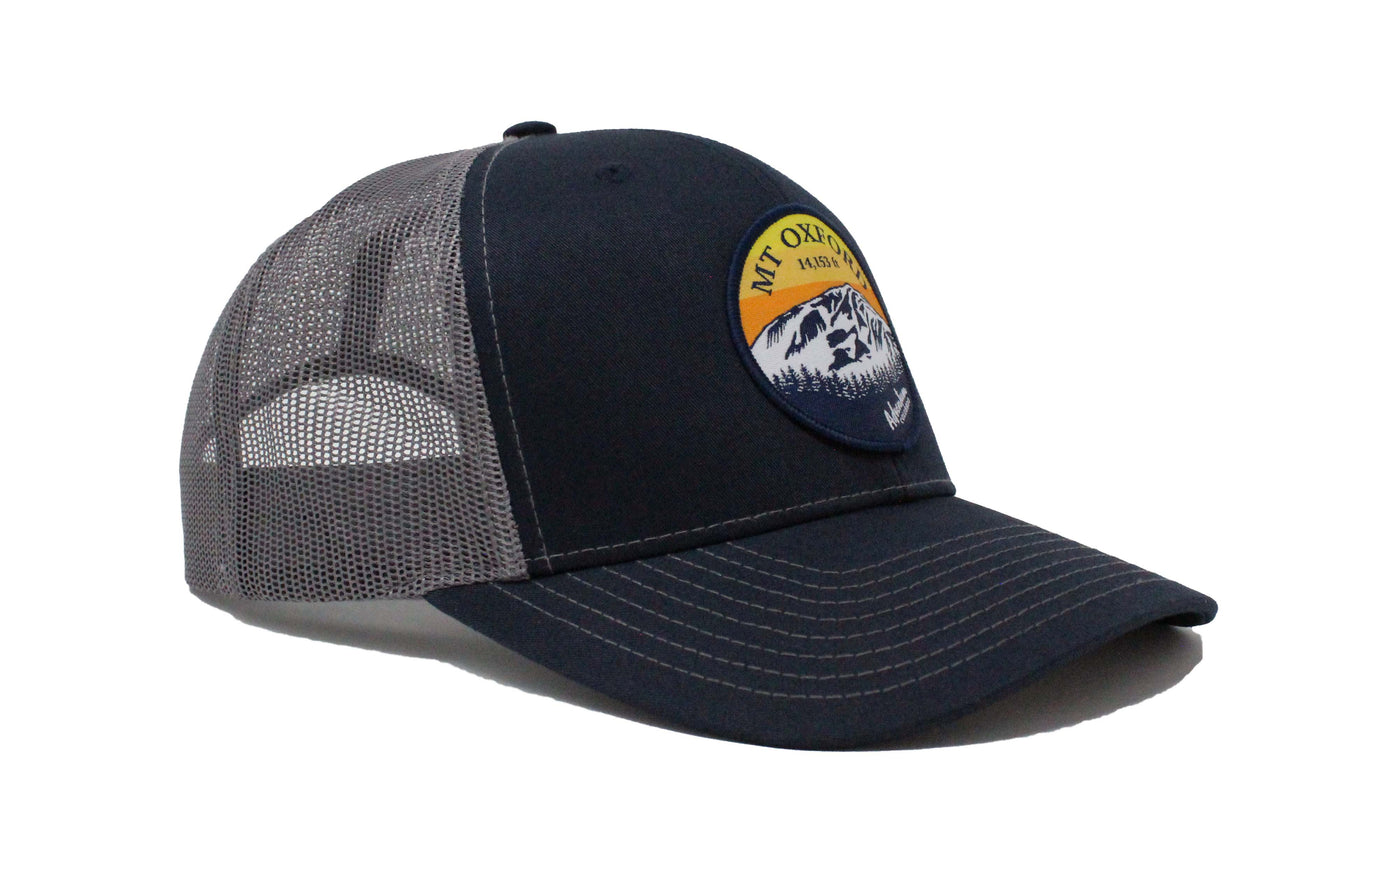 Mt. Oxford Trucker Hat